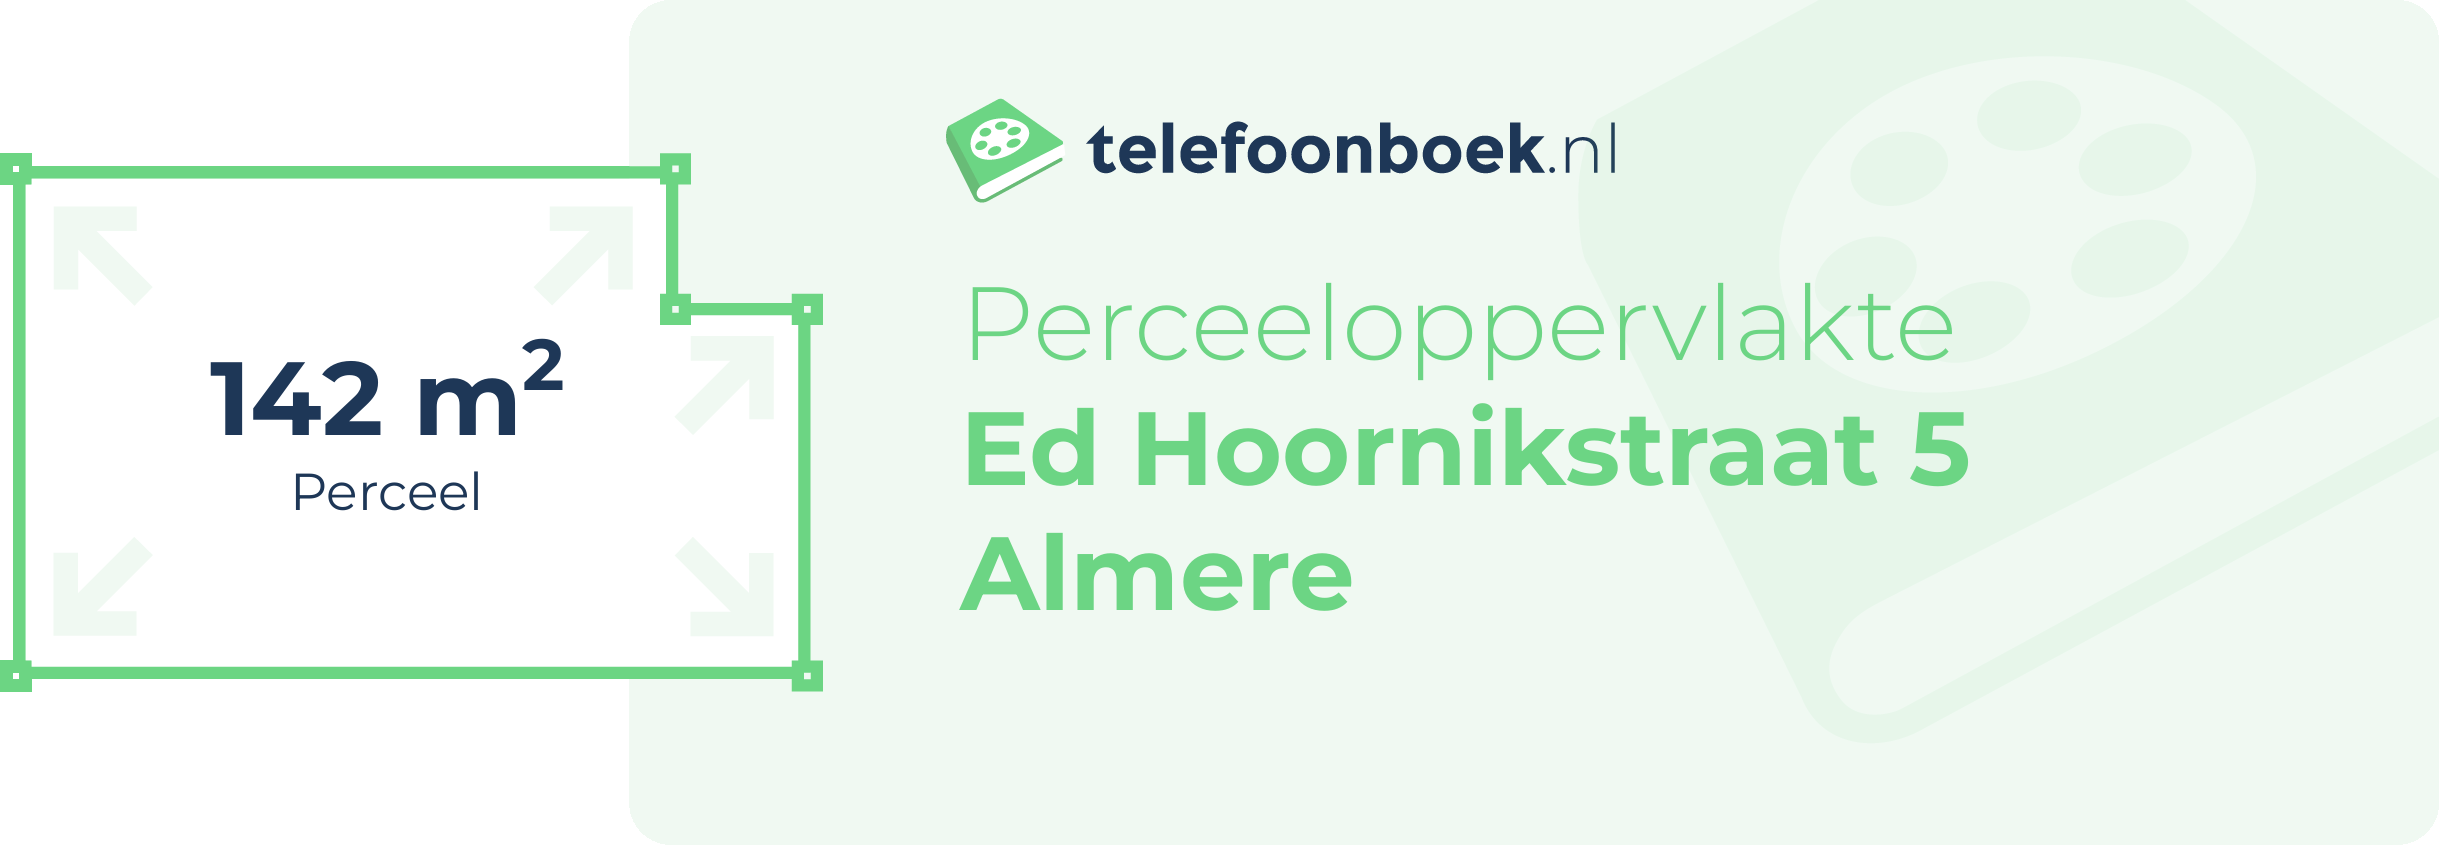 Perceeloppervlakte Ed Hoornikstraat 5 Almere